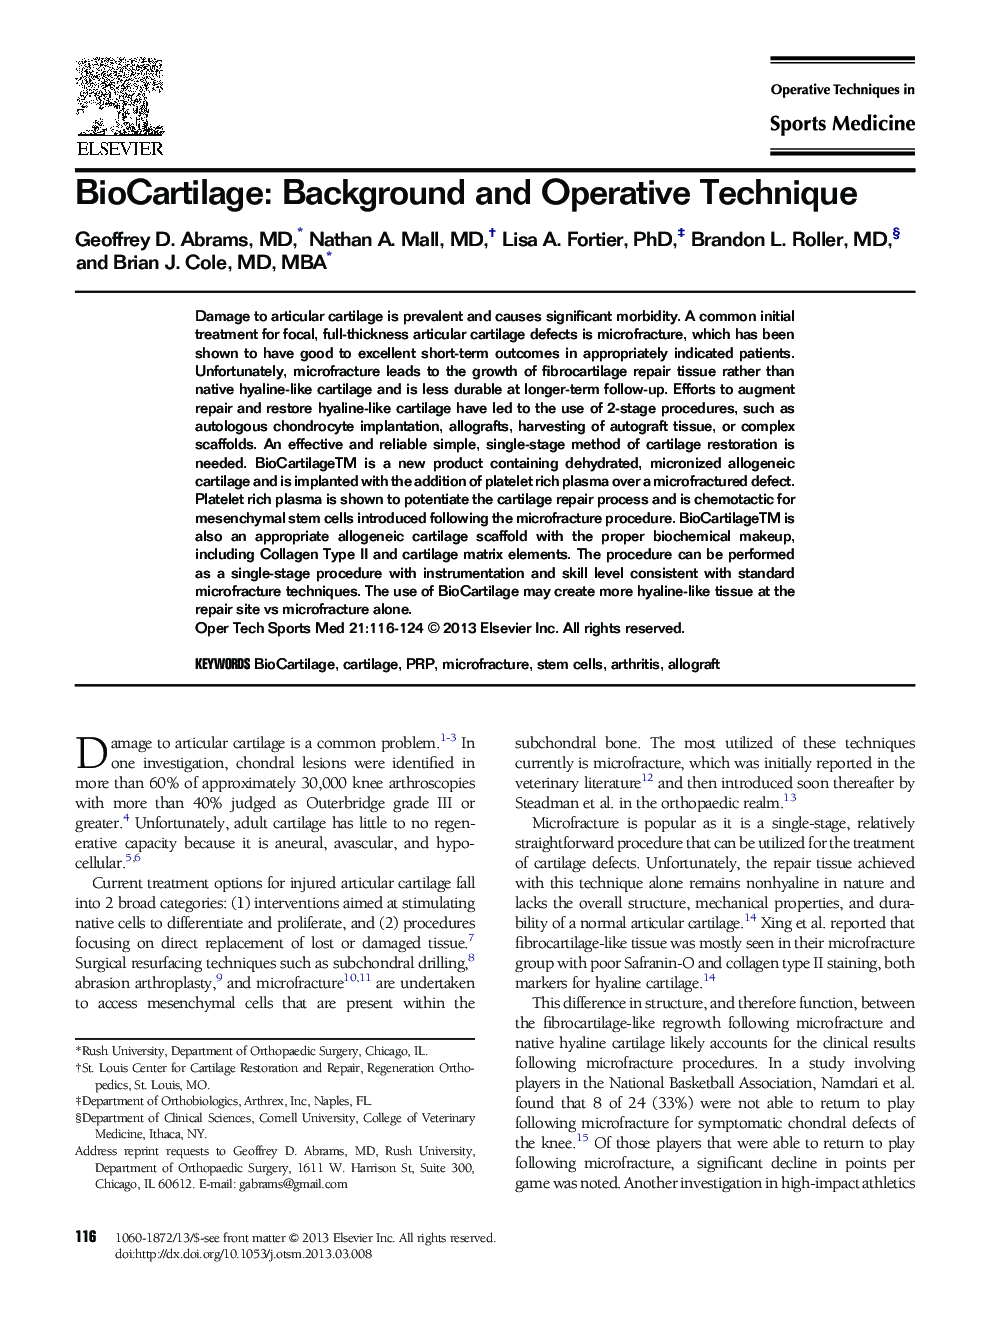 BioCartilage: Background and Operative Technique